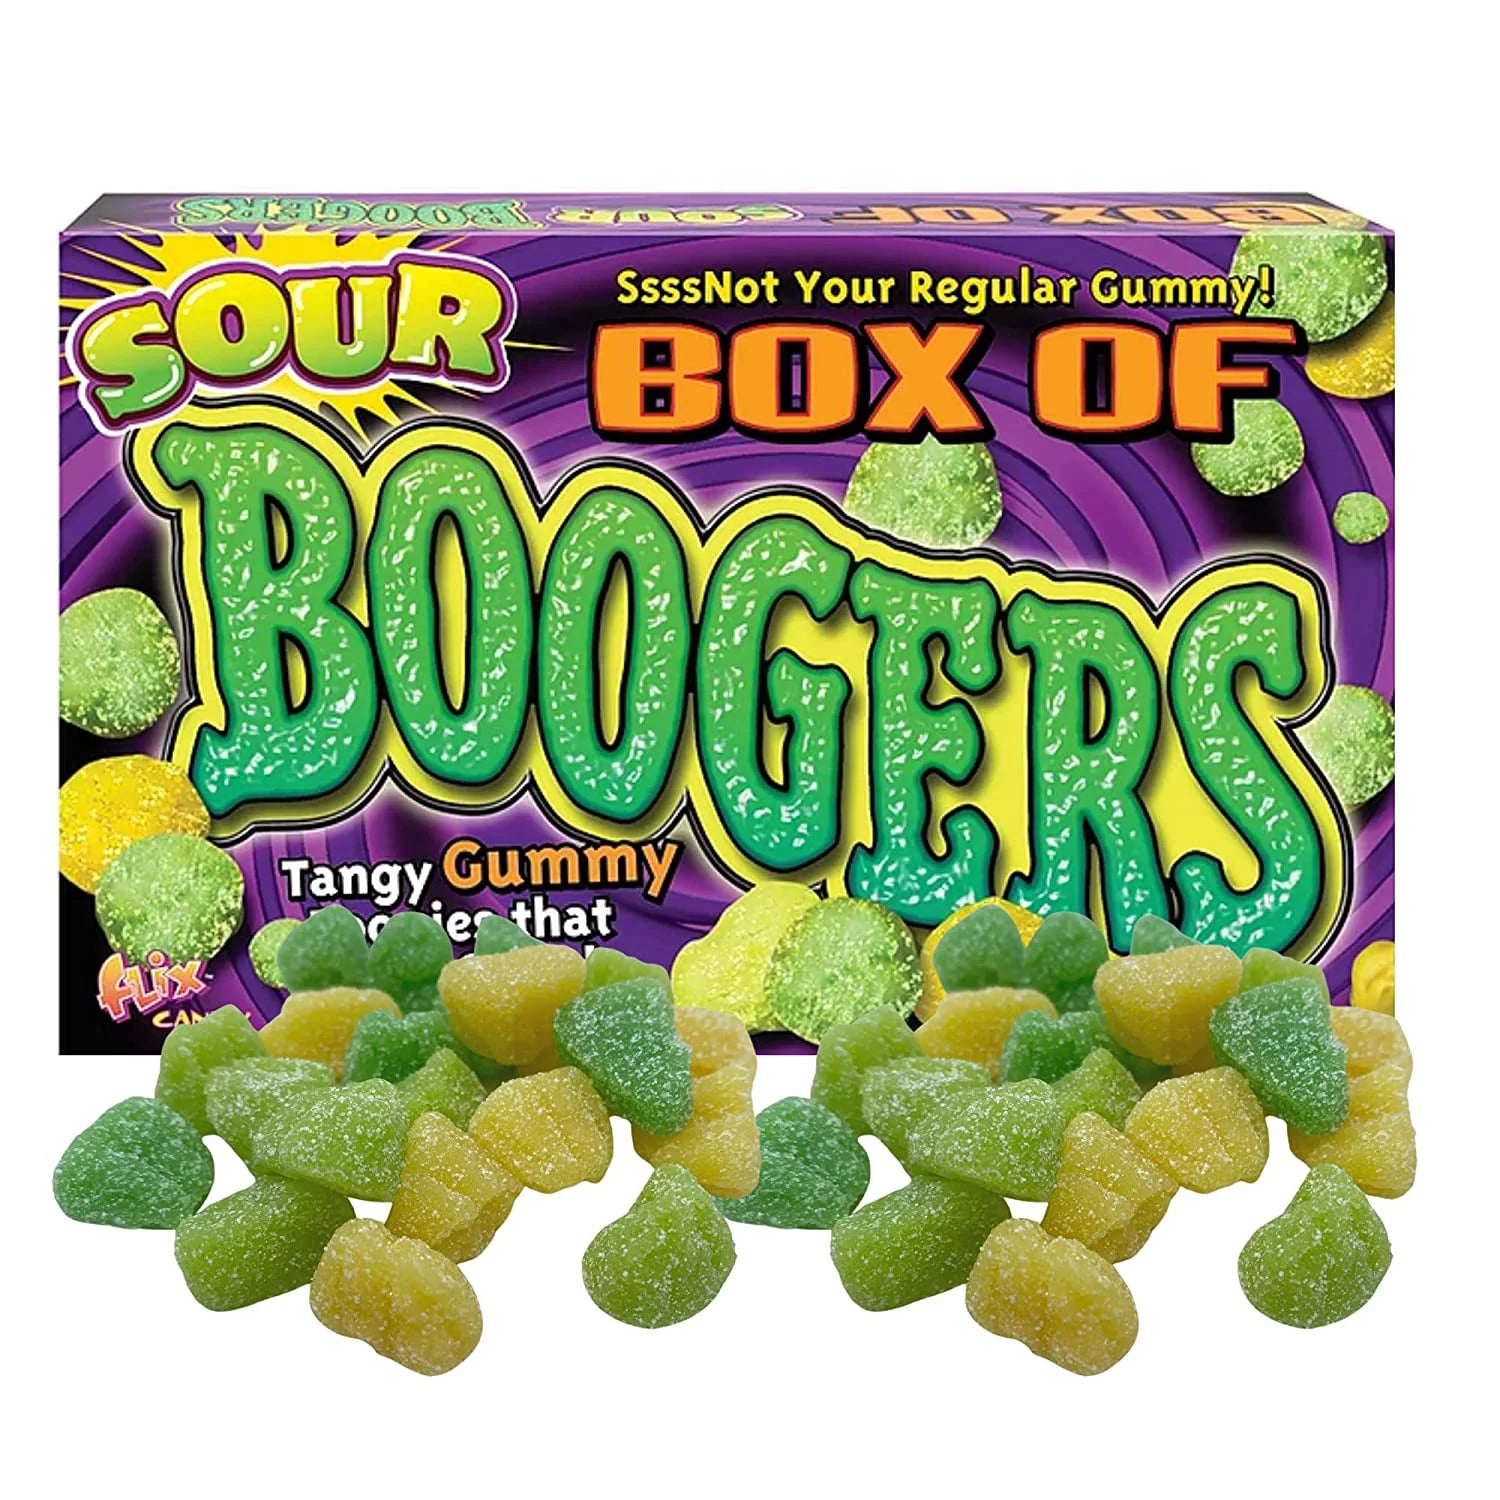 Sour Boogers Gummy 3.25oz (Theater Box)